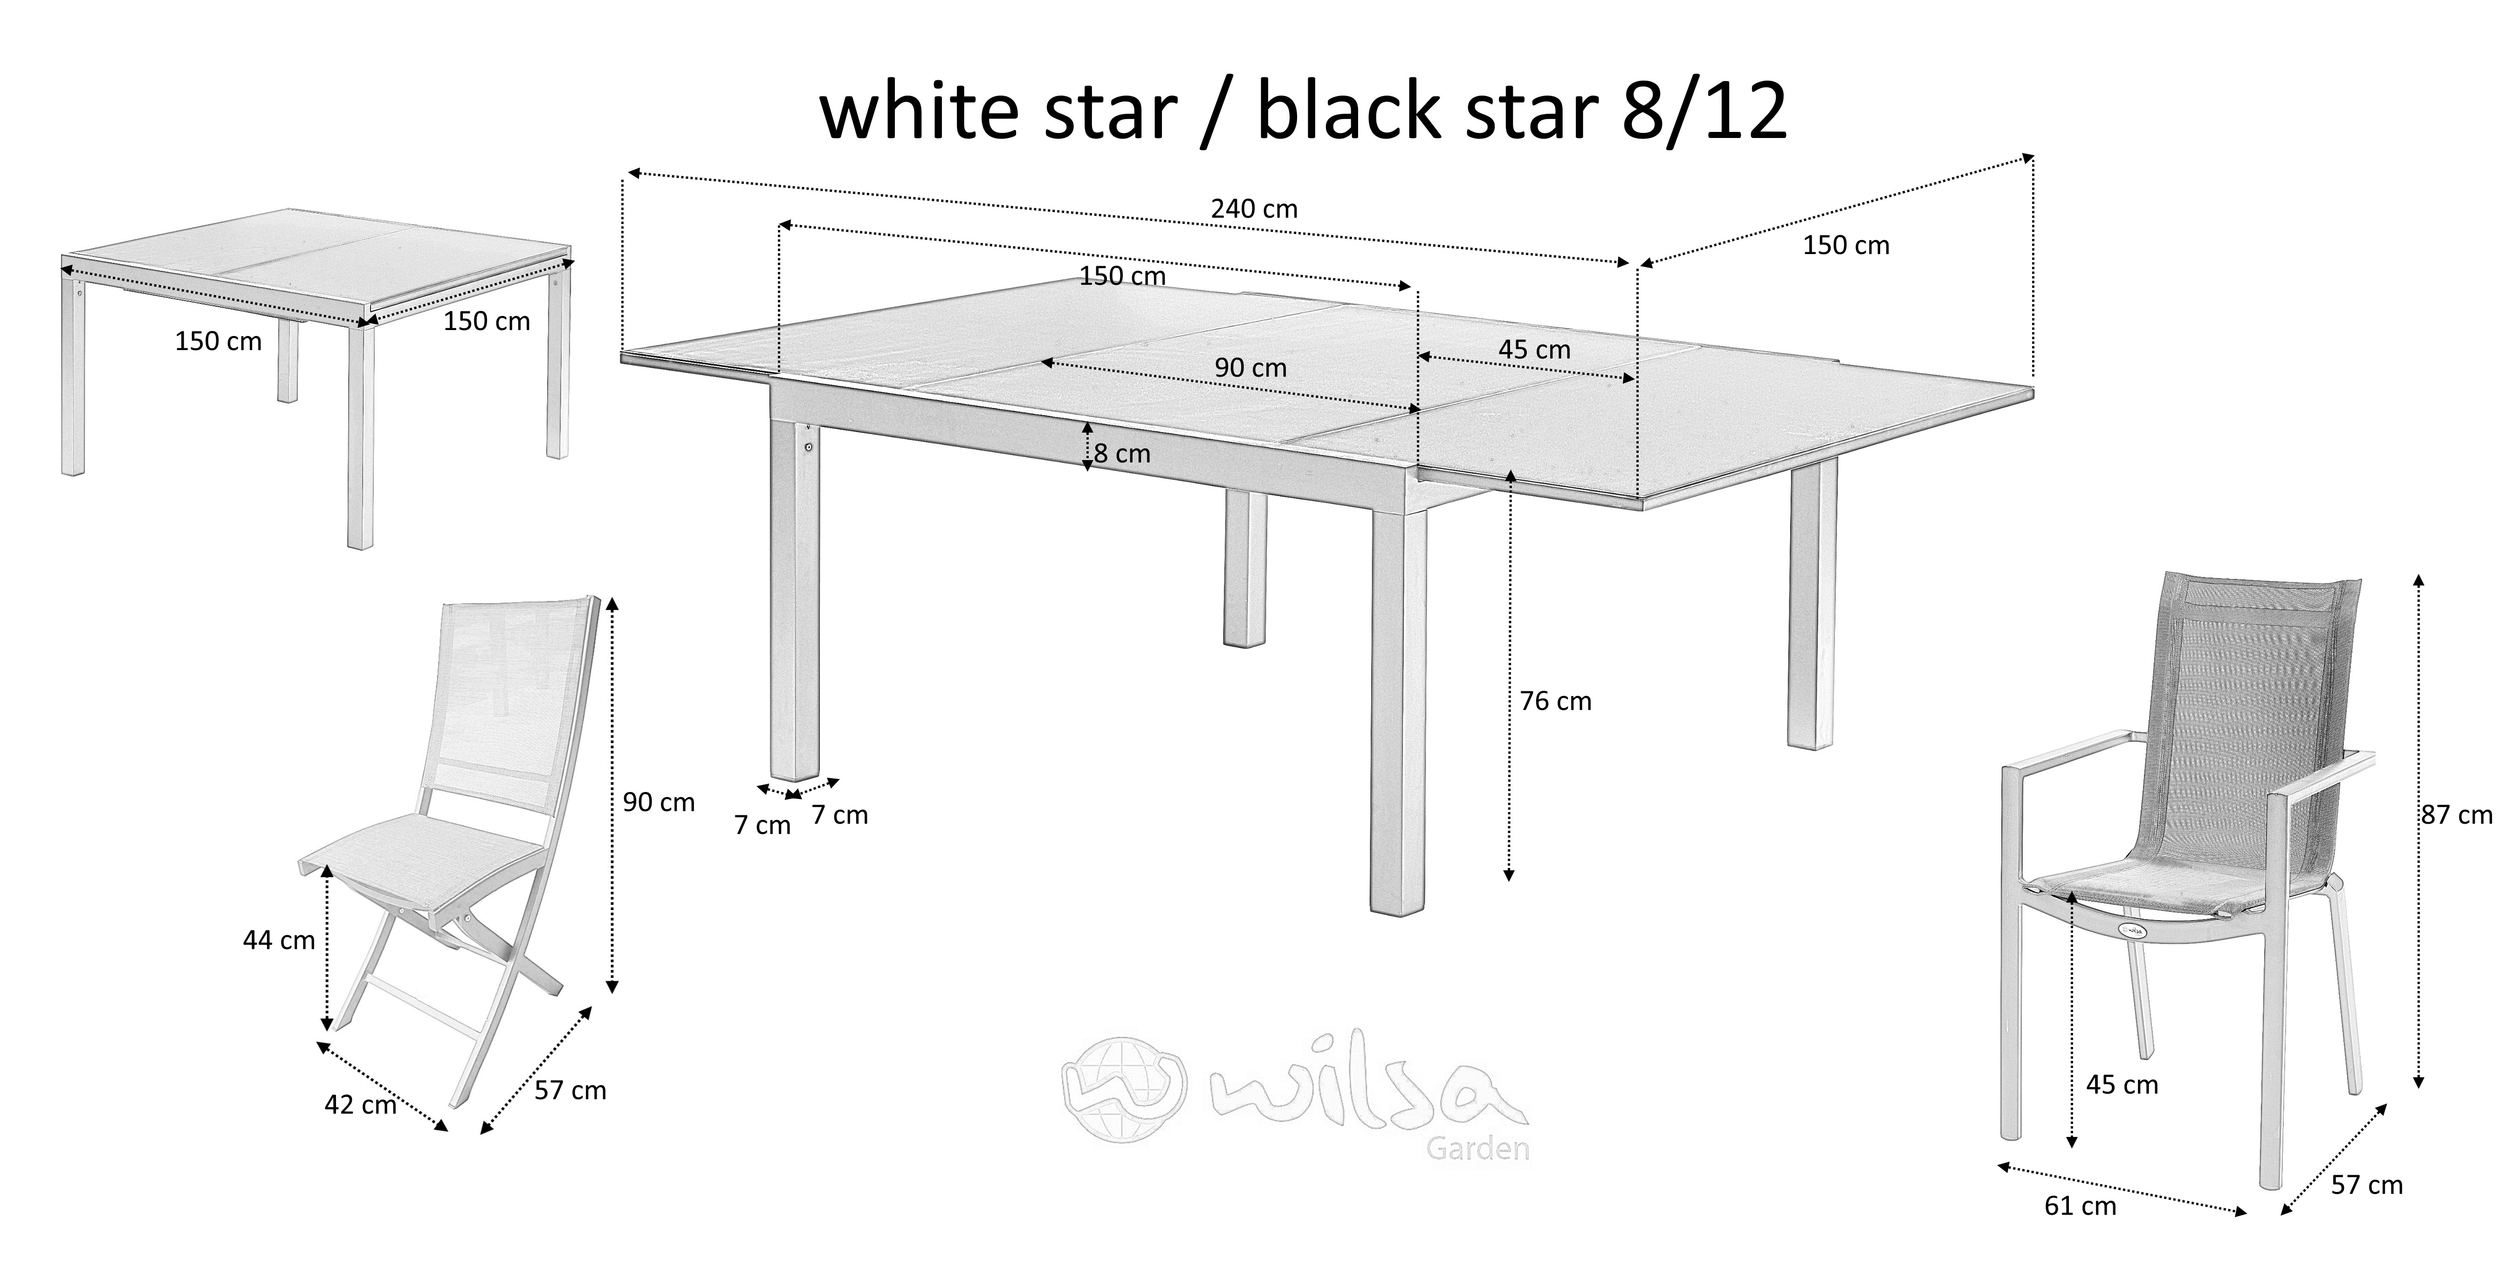 WhiteStar-BlackStar 8-12